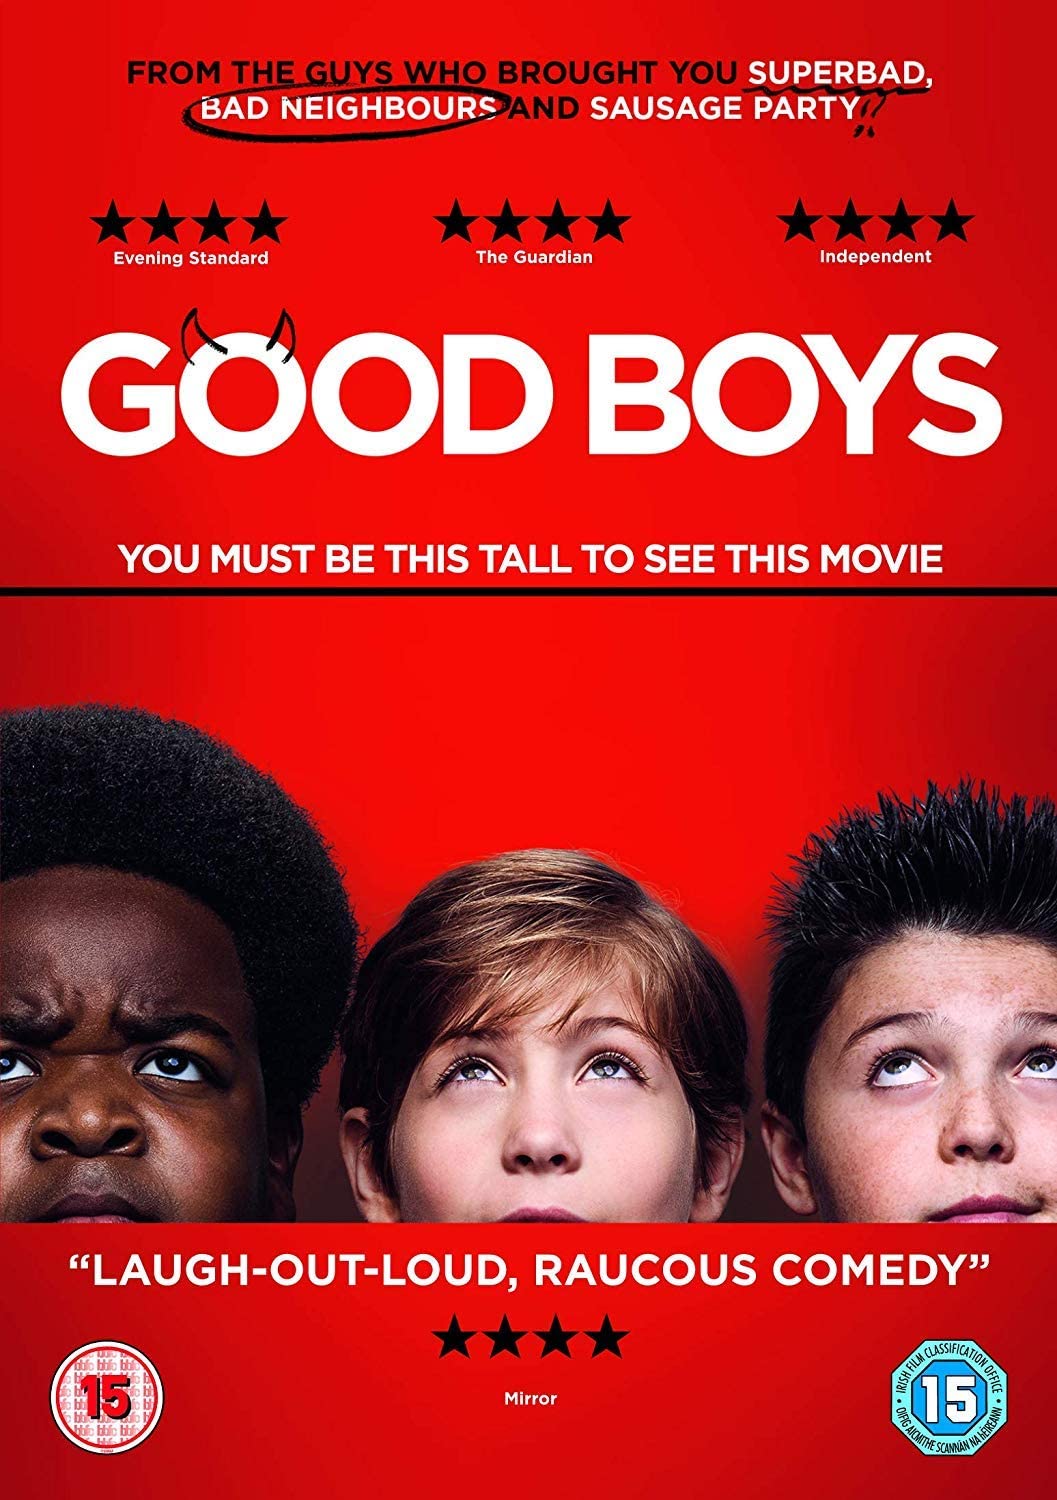 Good Boys -Comedy/Adventure [DVD]